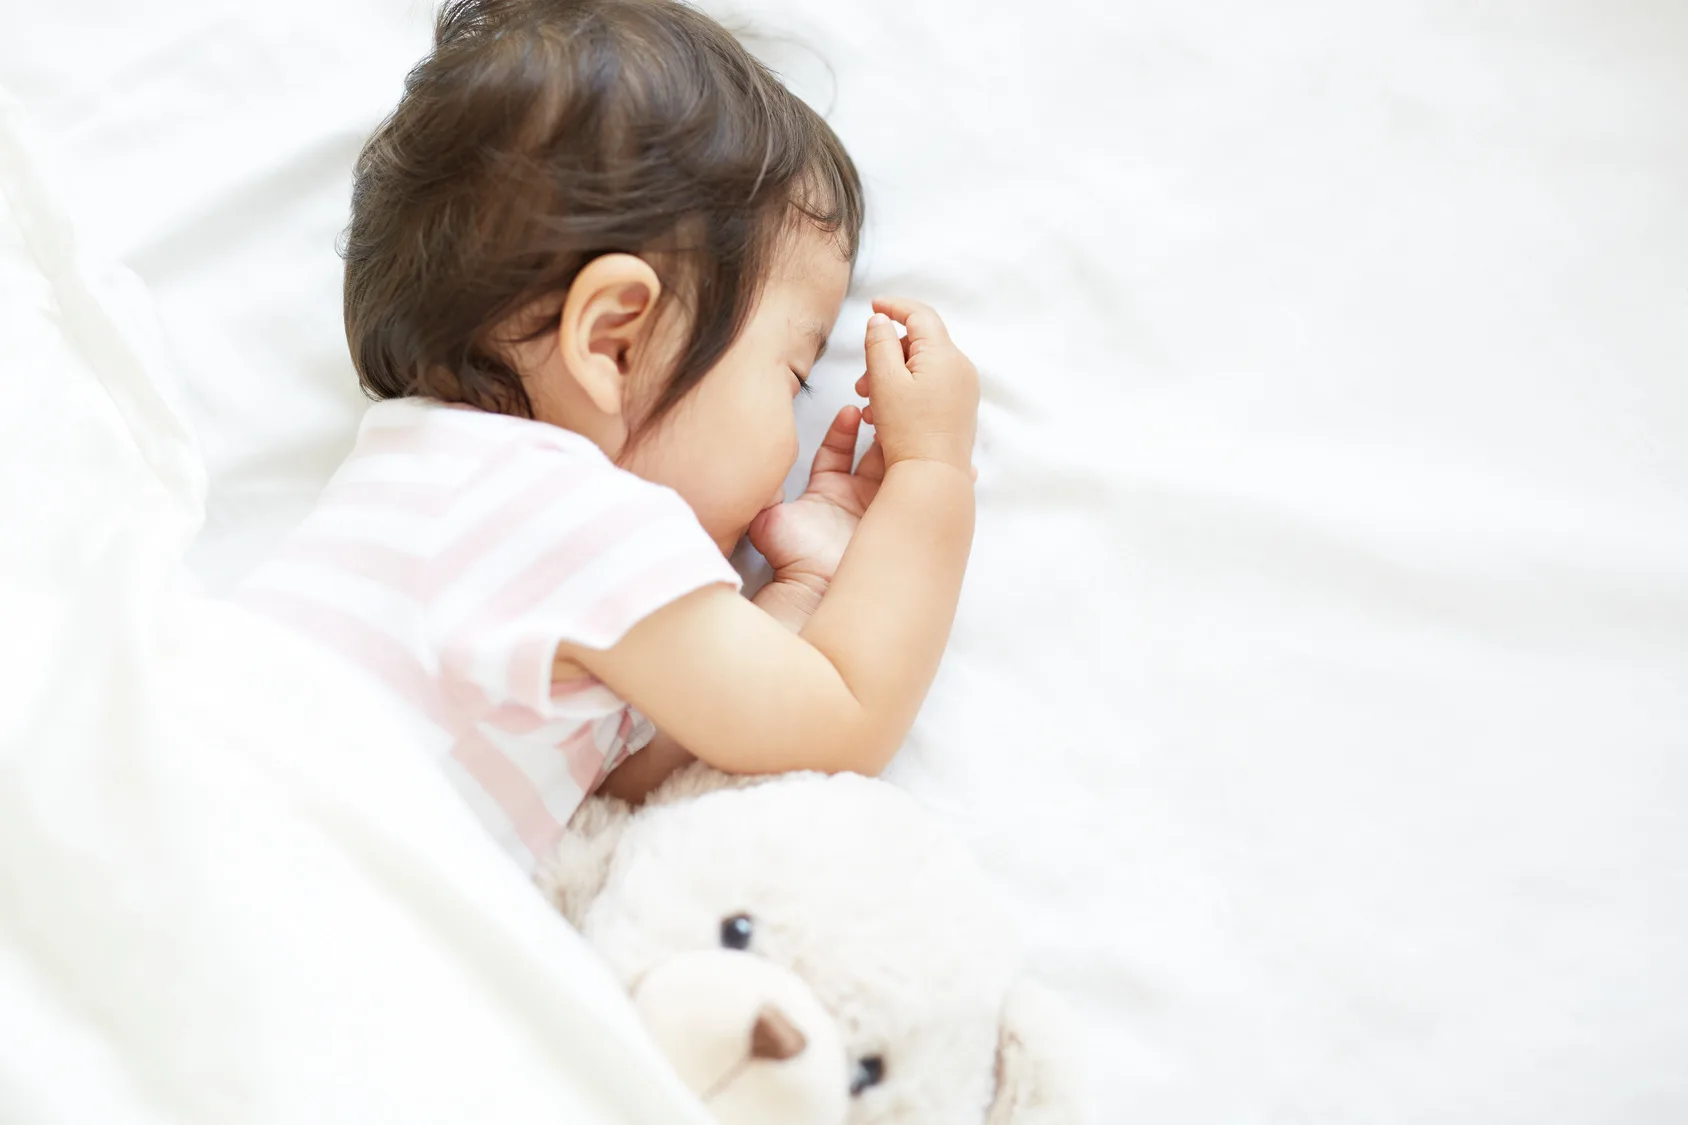 Importance of sleeping habits in children